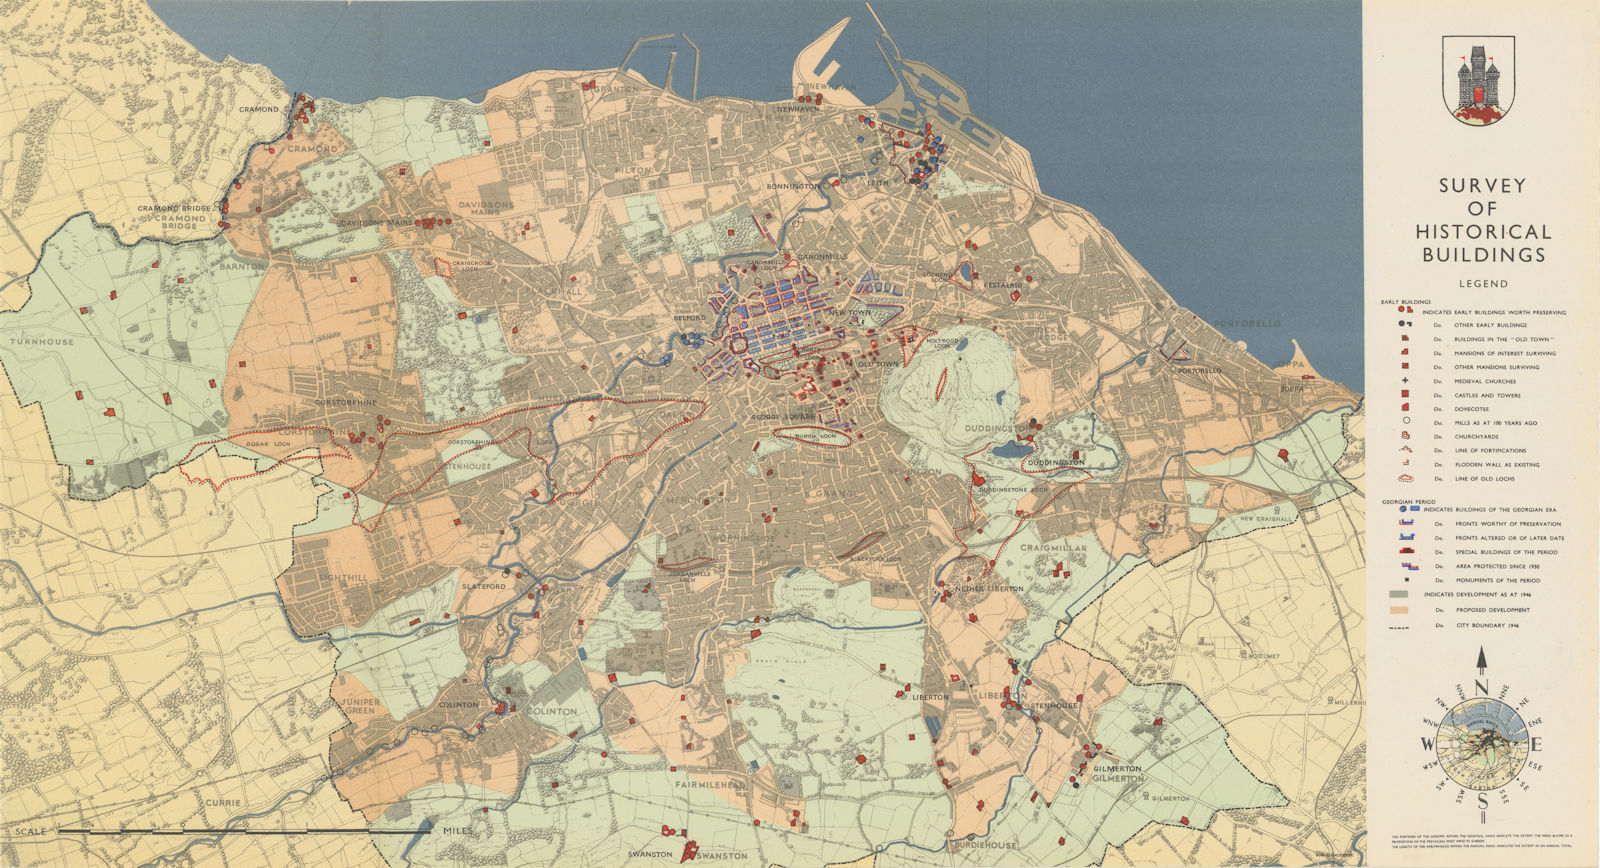 EDINBURGH. Survey of Historical Buildings. Early/Georgian. ABERCROMBIE 1949 map